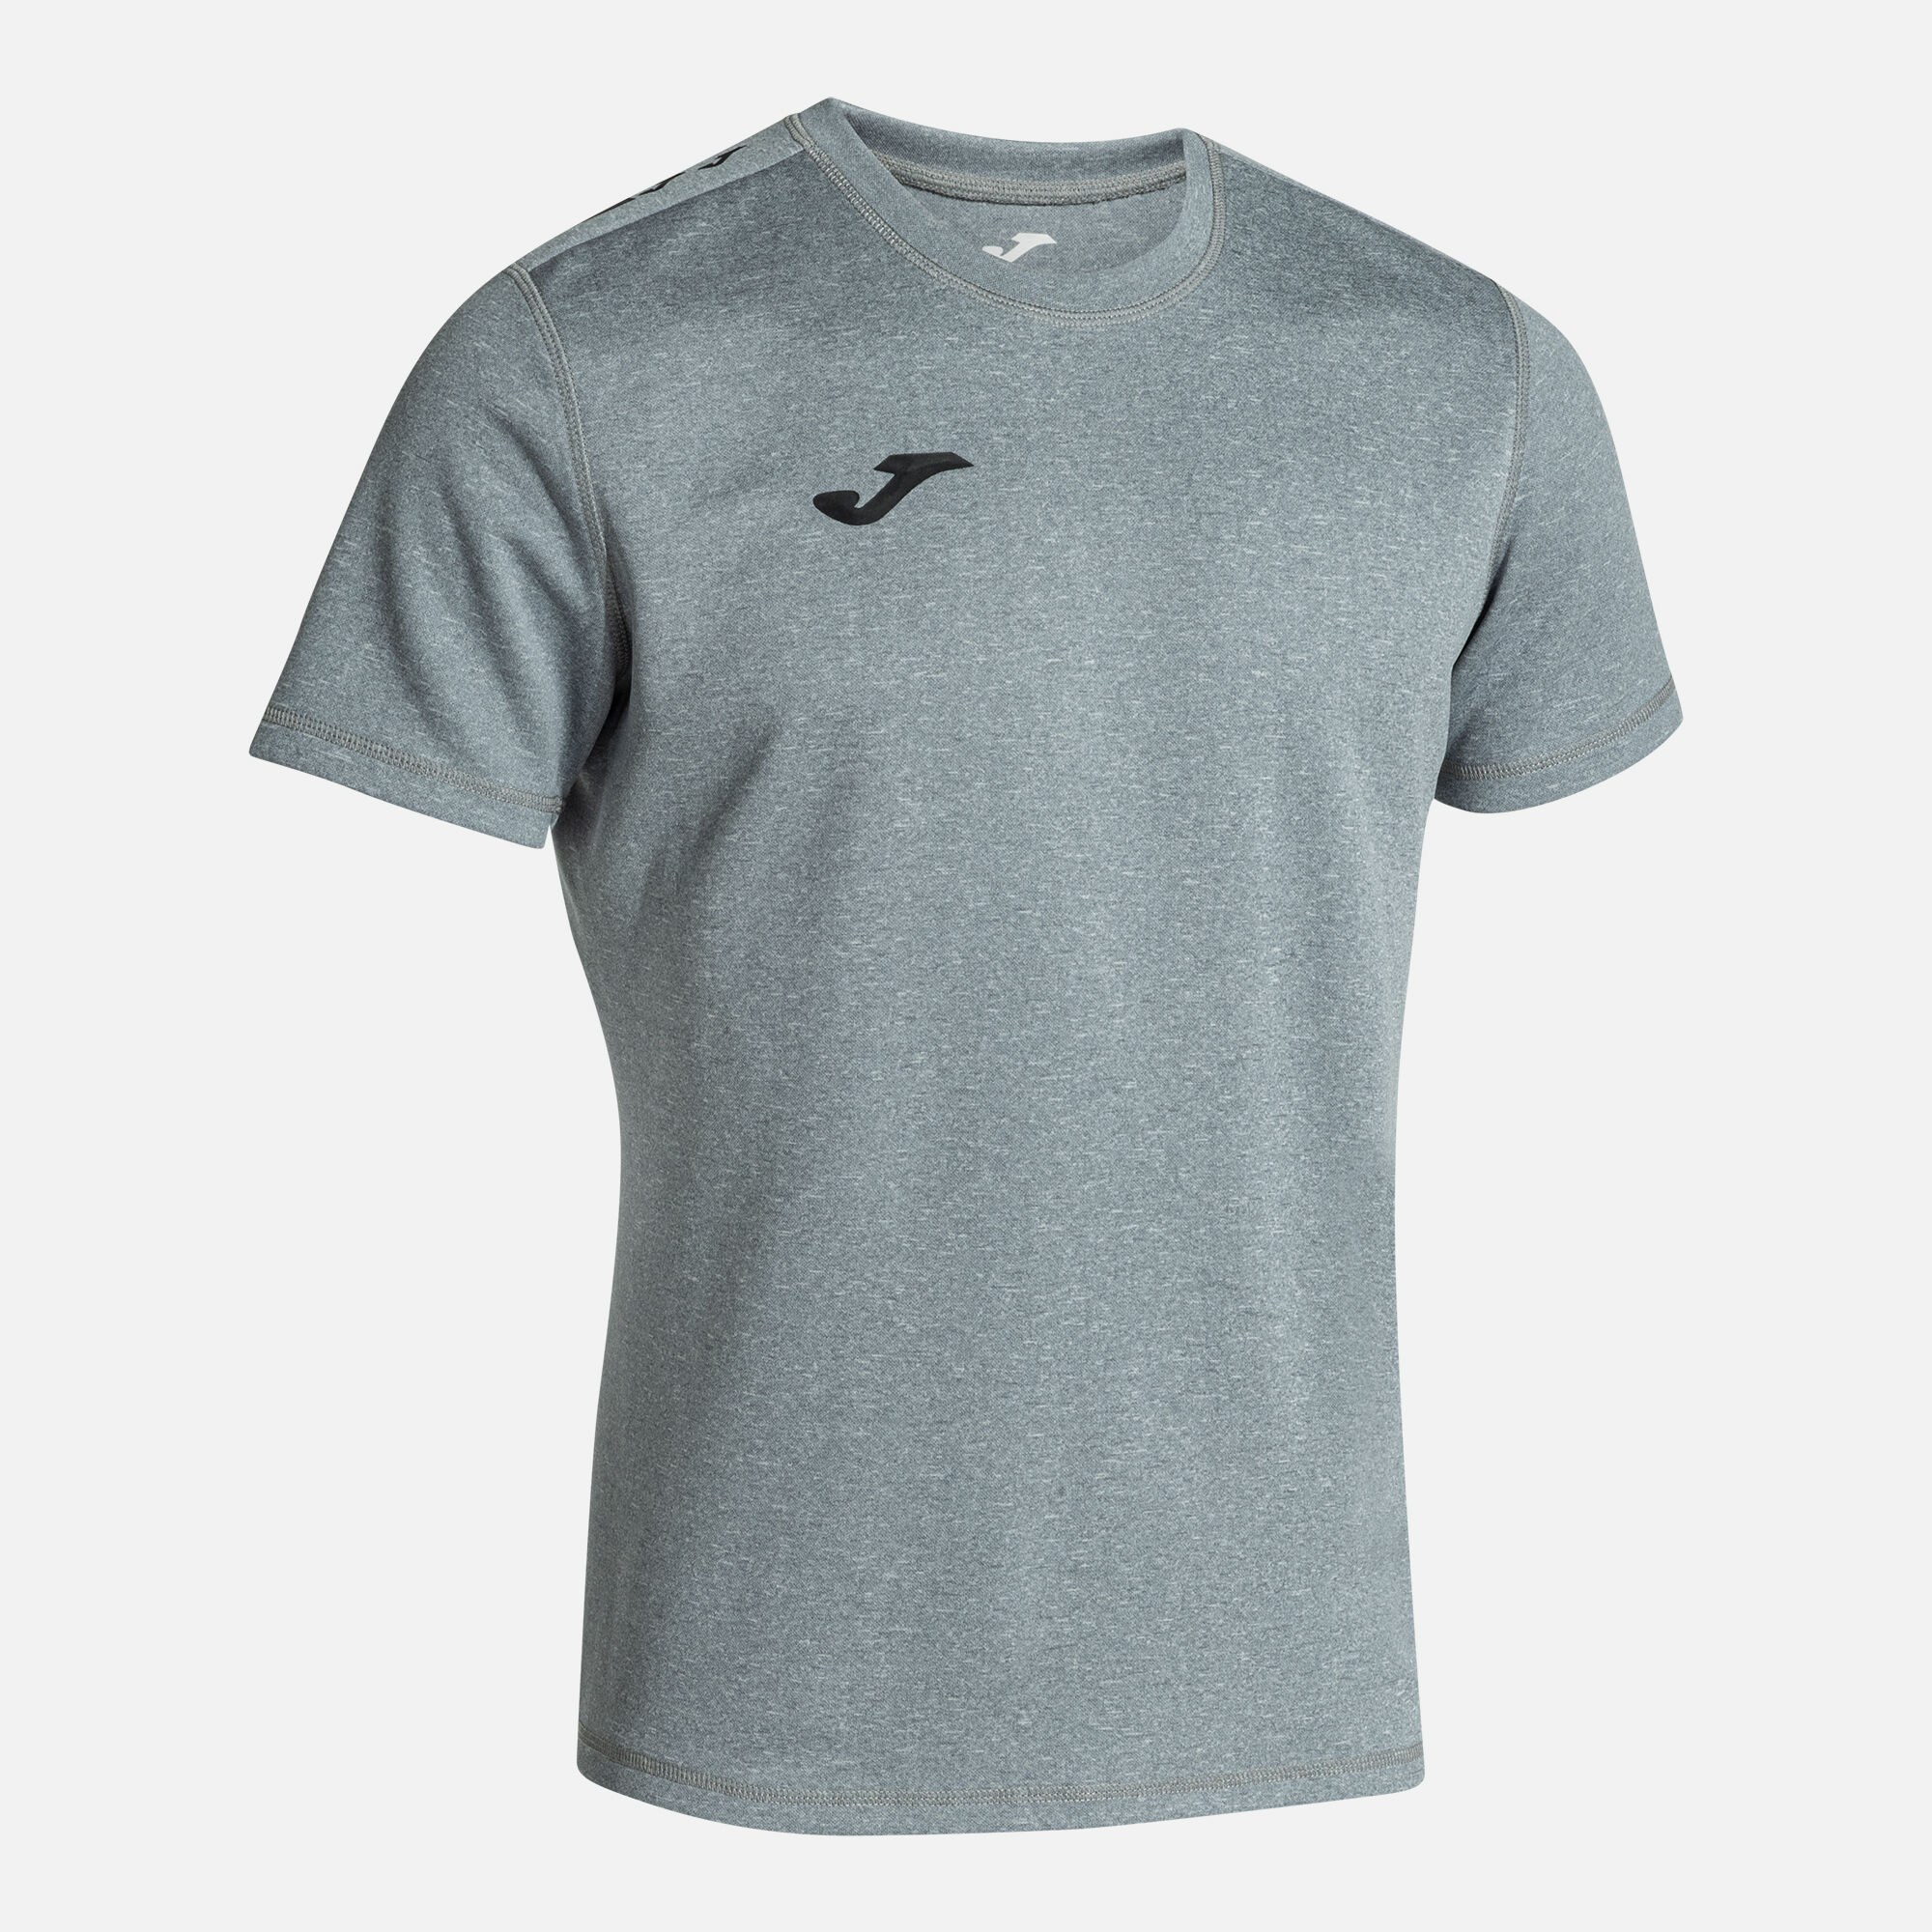 Camiseta manga corta hombre Olimpiada rugby gris melange